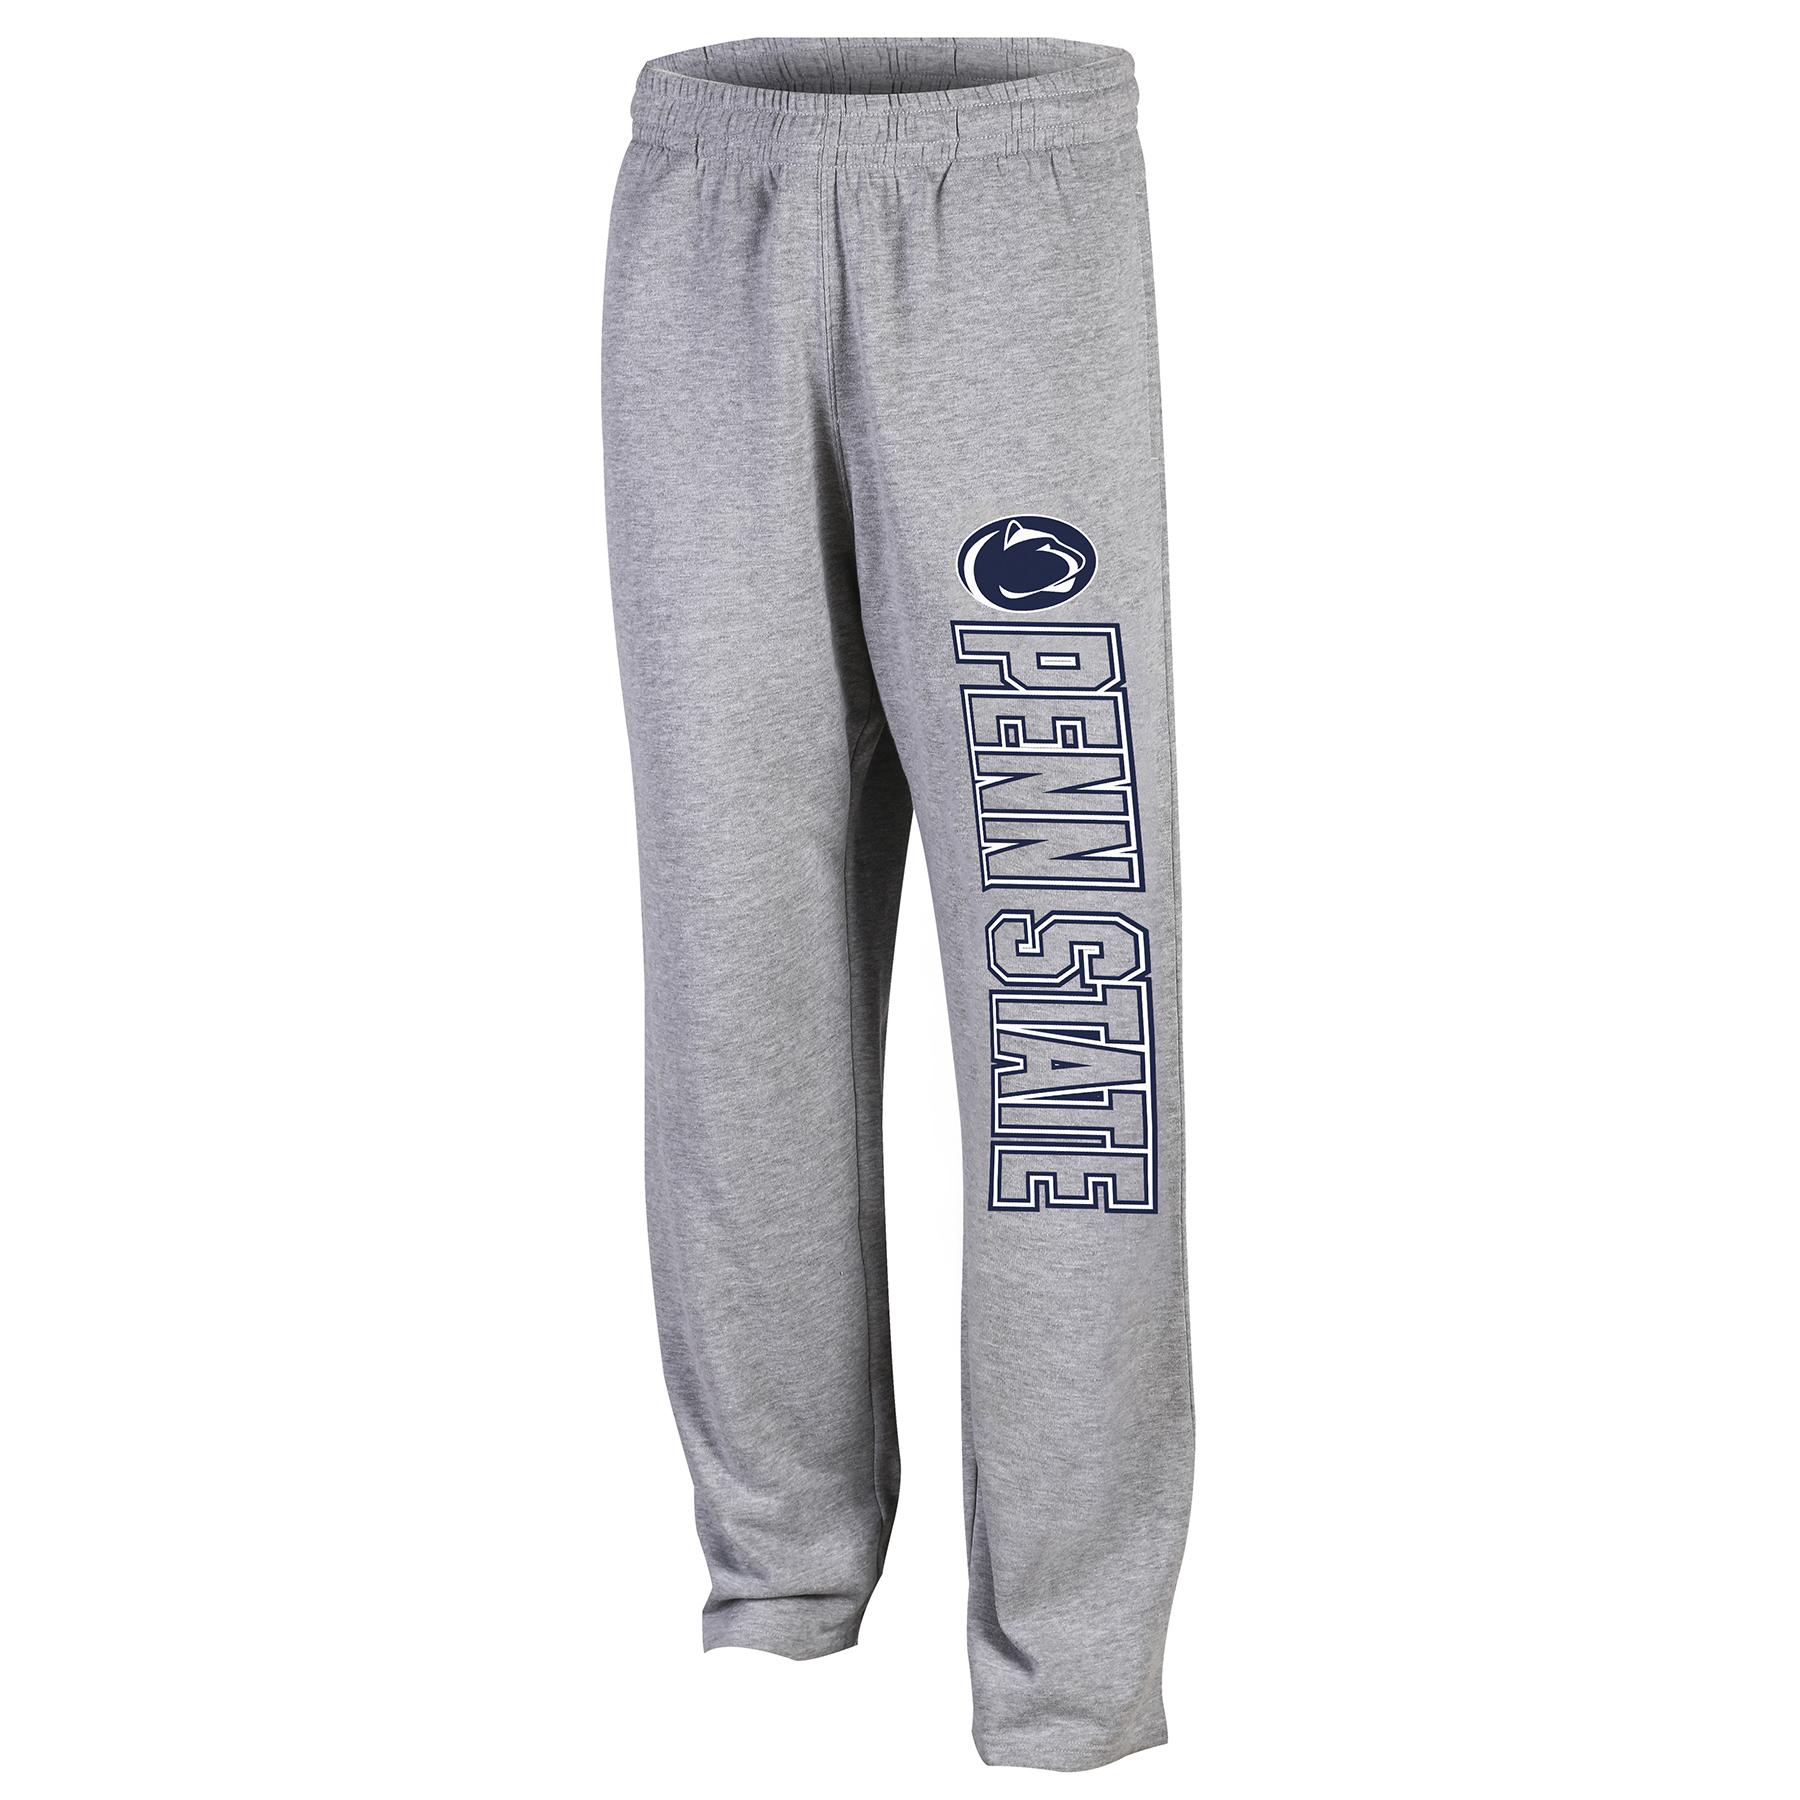 NCAA Men's Sweatpants - Penn State University Nittany Lions